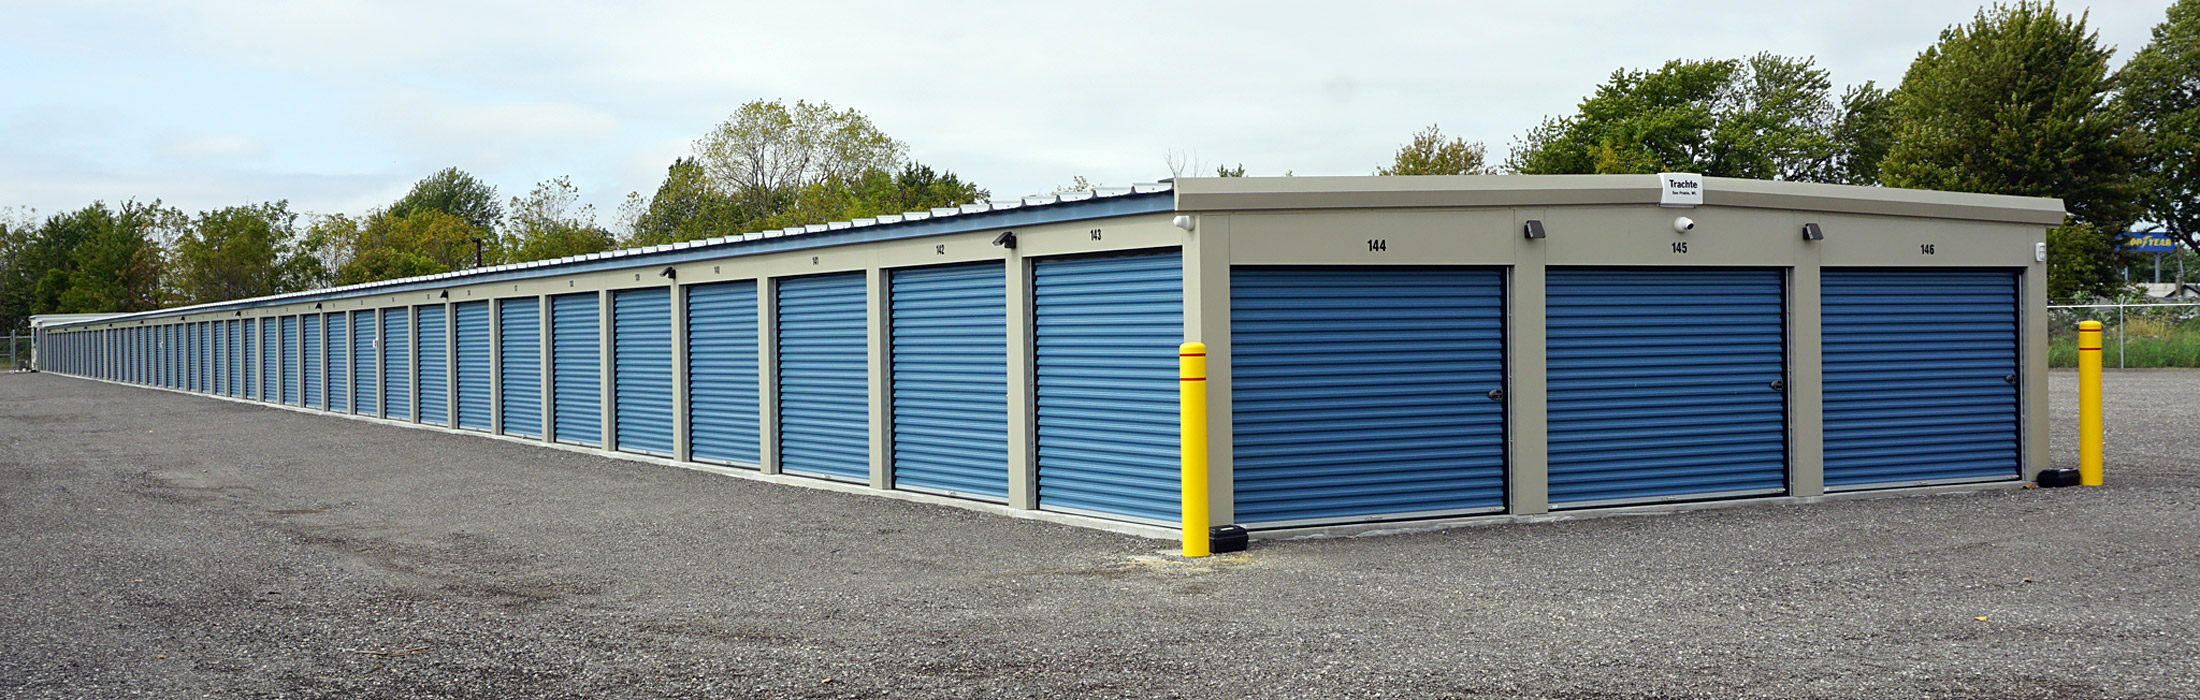 tilbury storage facility